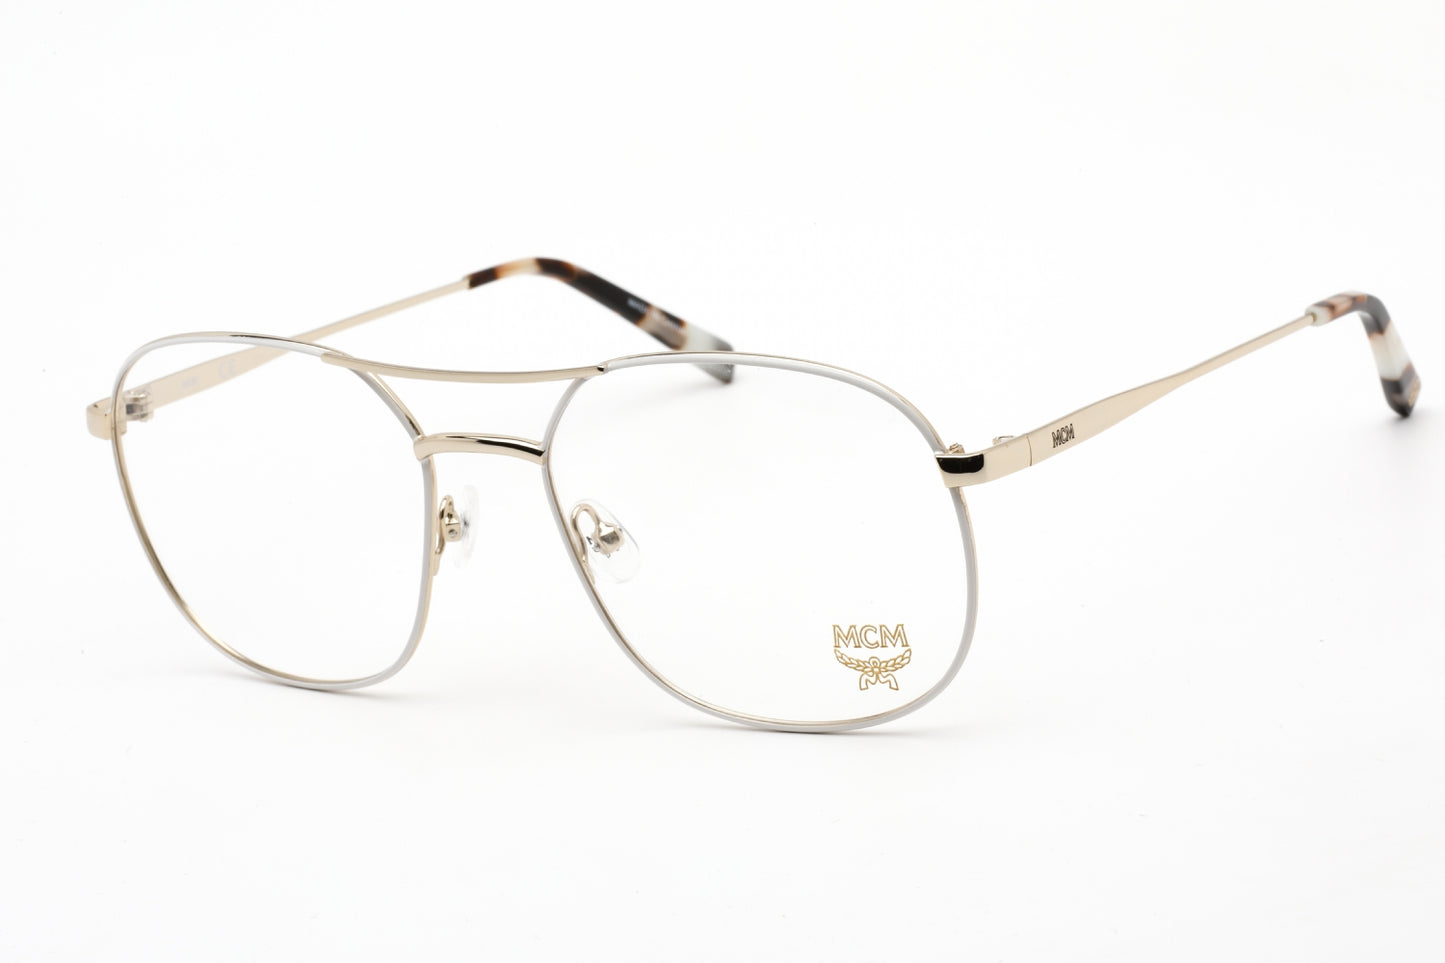 MCM MCM2154-109 56mm New Eyeglasses